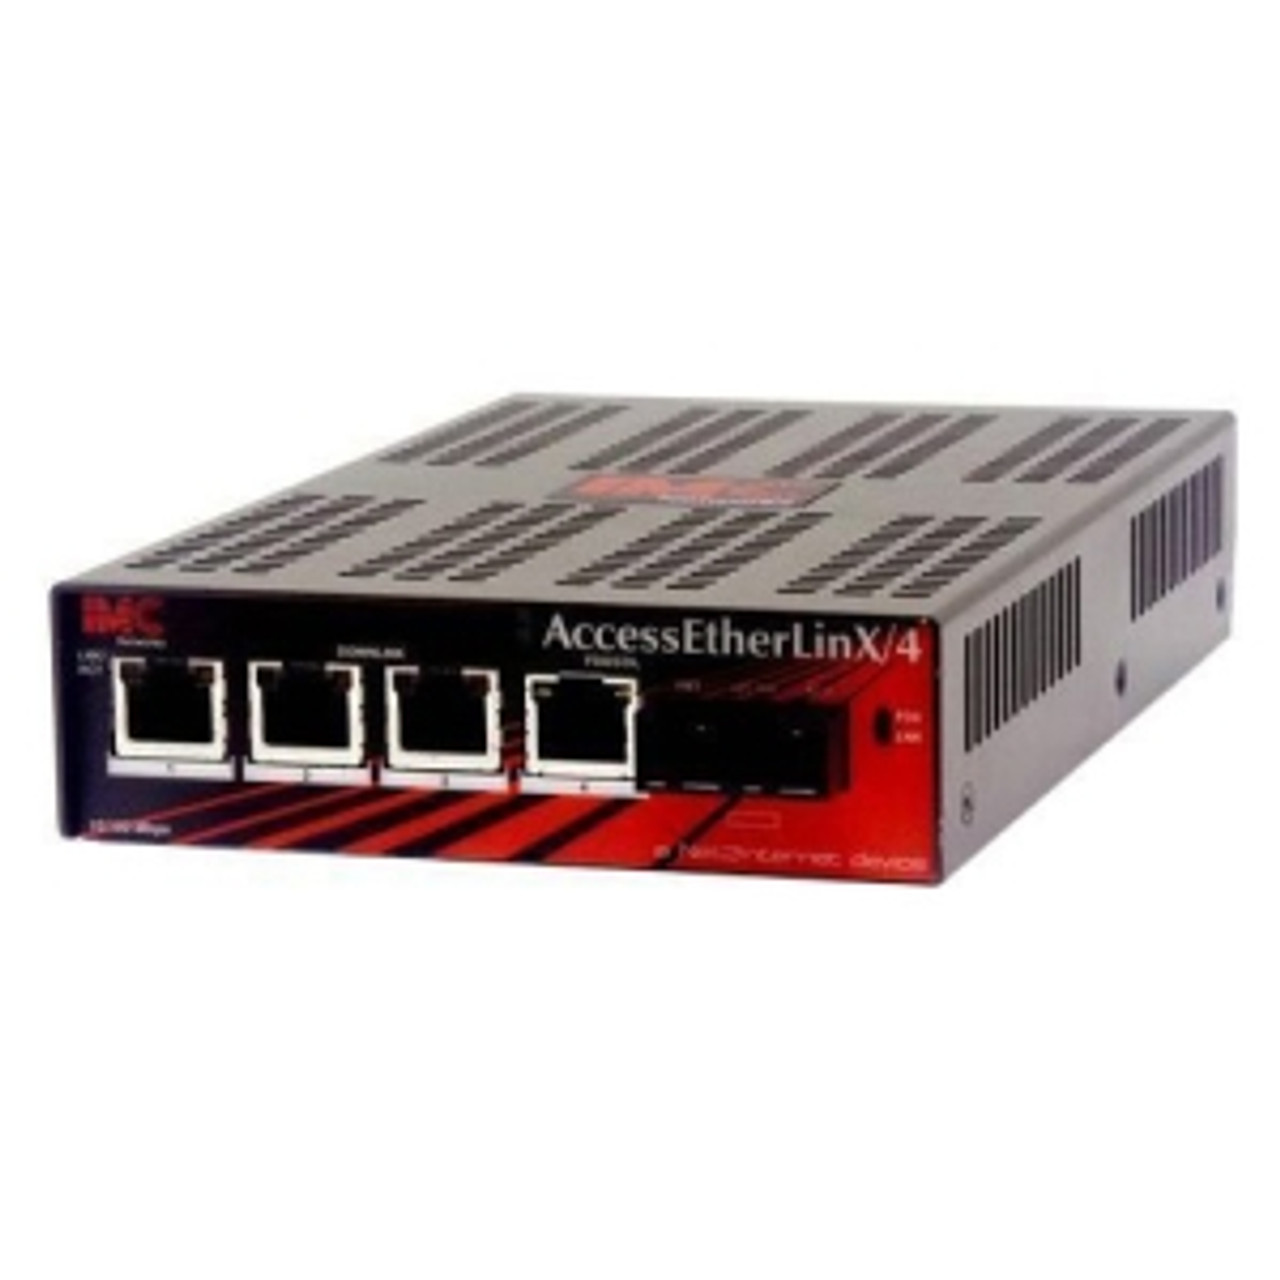 852-10073 IMC AccessEtherLinX/4 852-10073 Ethernet Switch 5 Ports Manageable 4 x RJ-45 1 x SC 10/100Base-TX, 100Base-FX